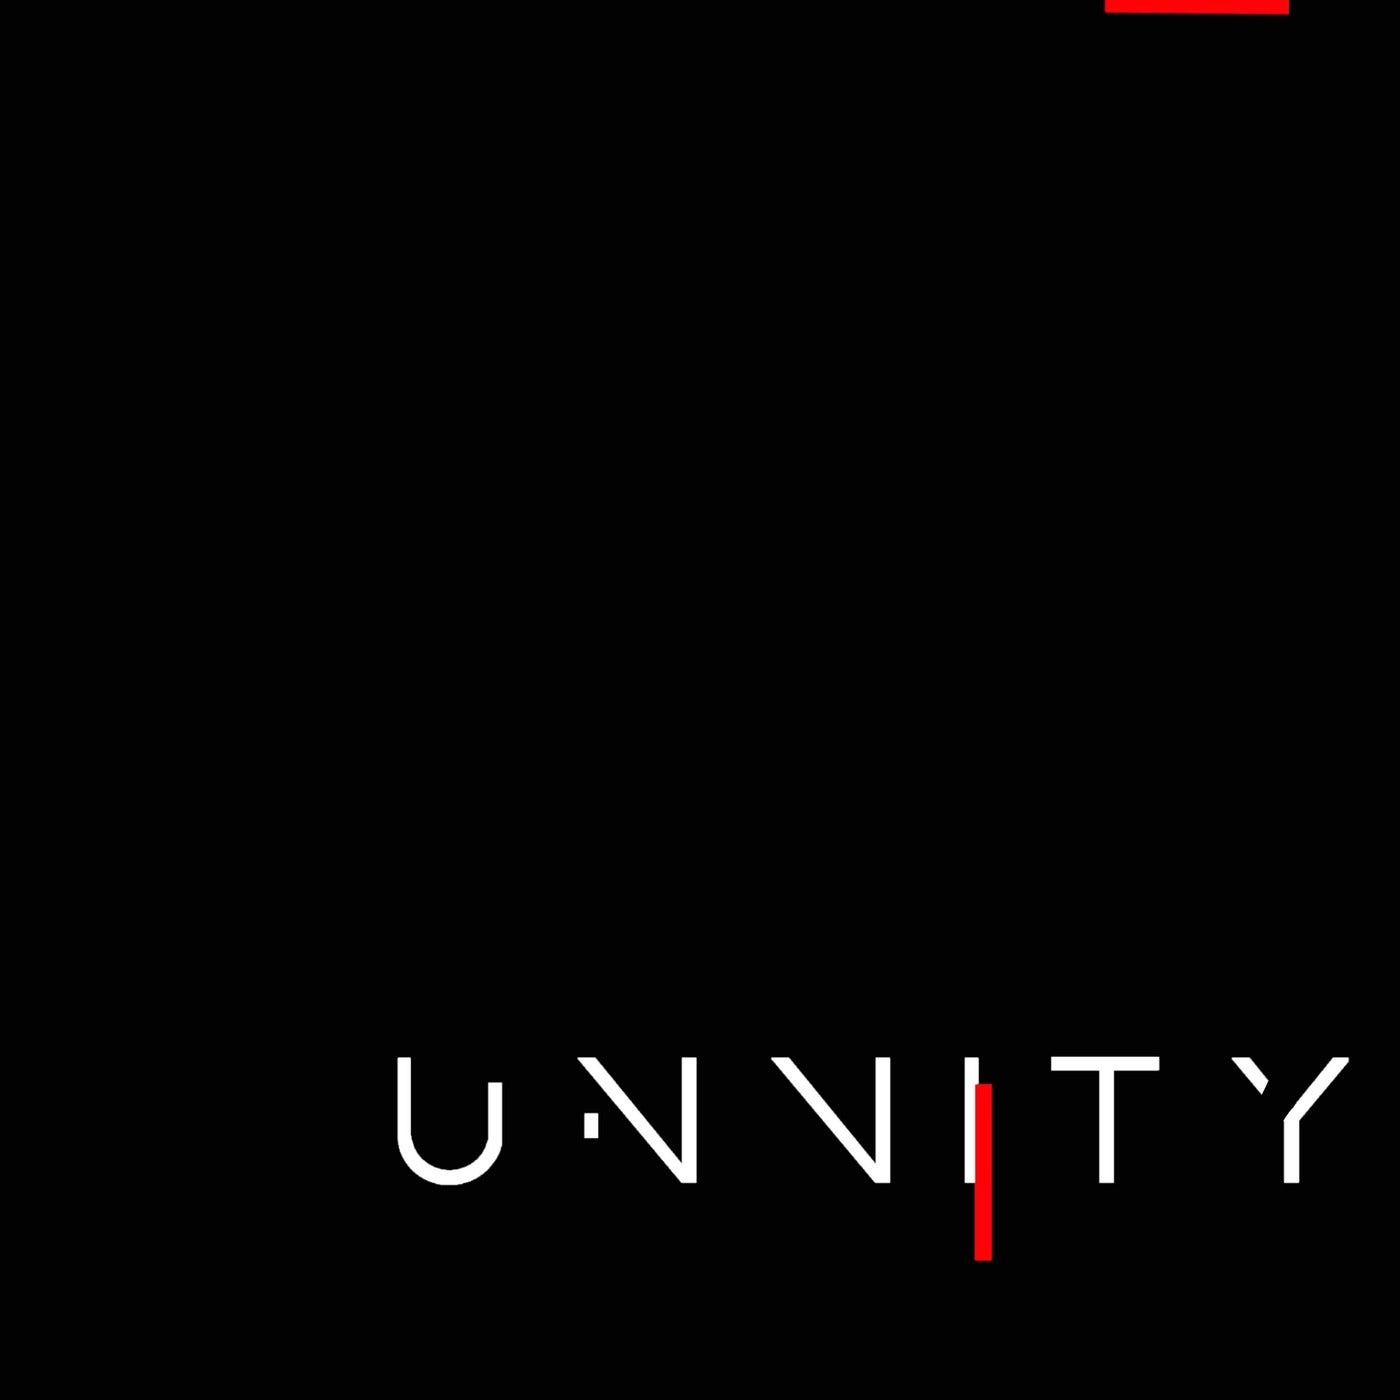 Unnity